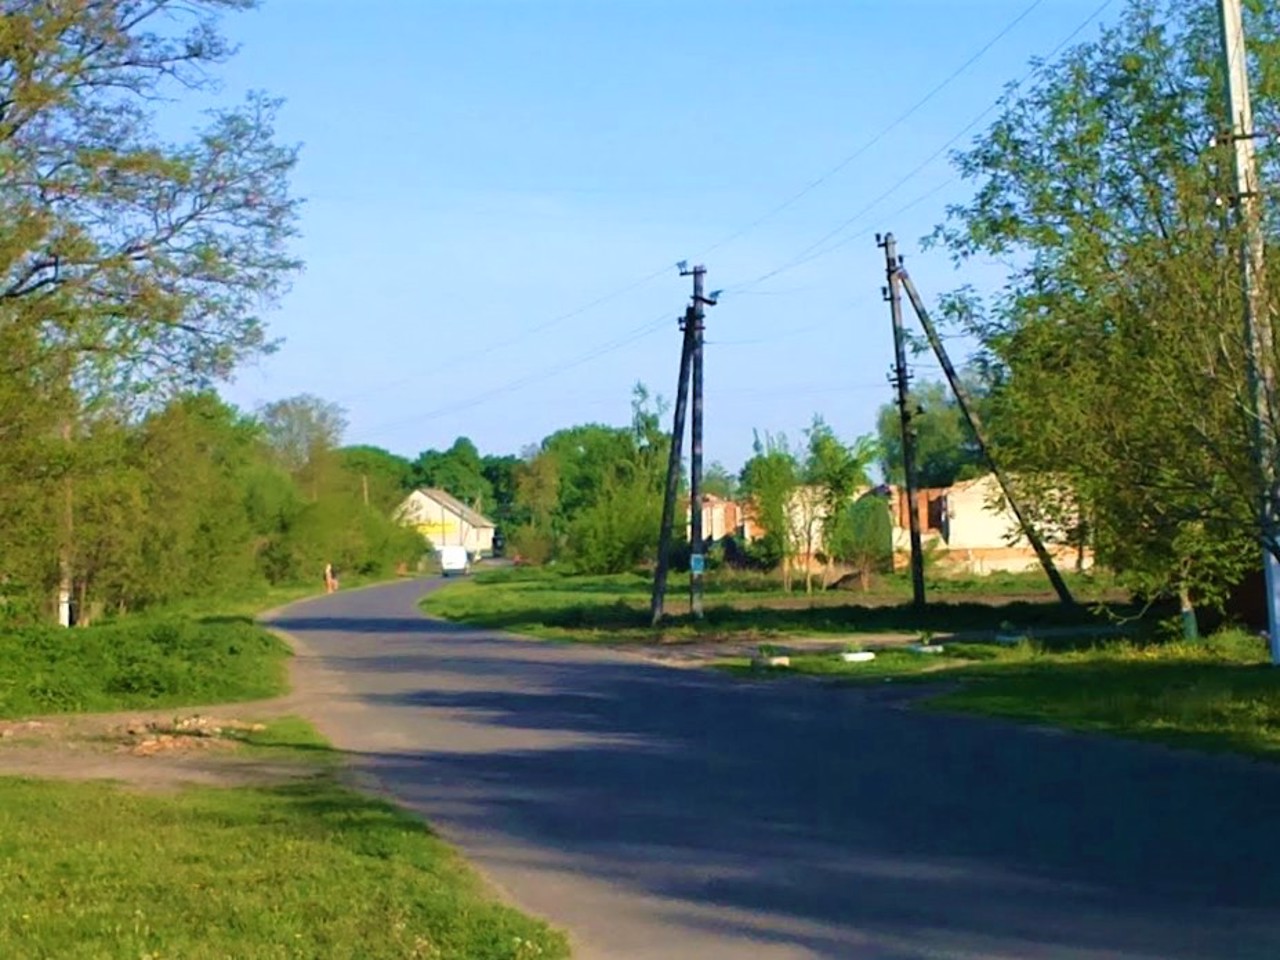 Zhurivka village